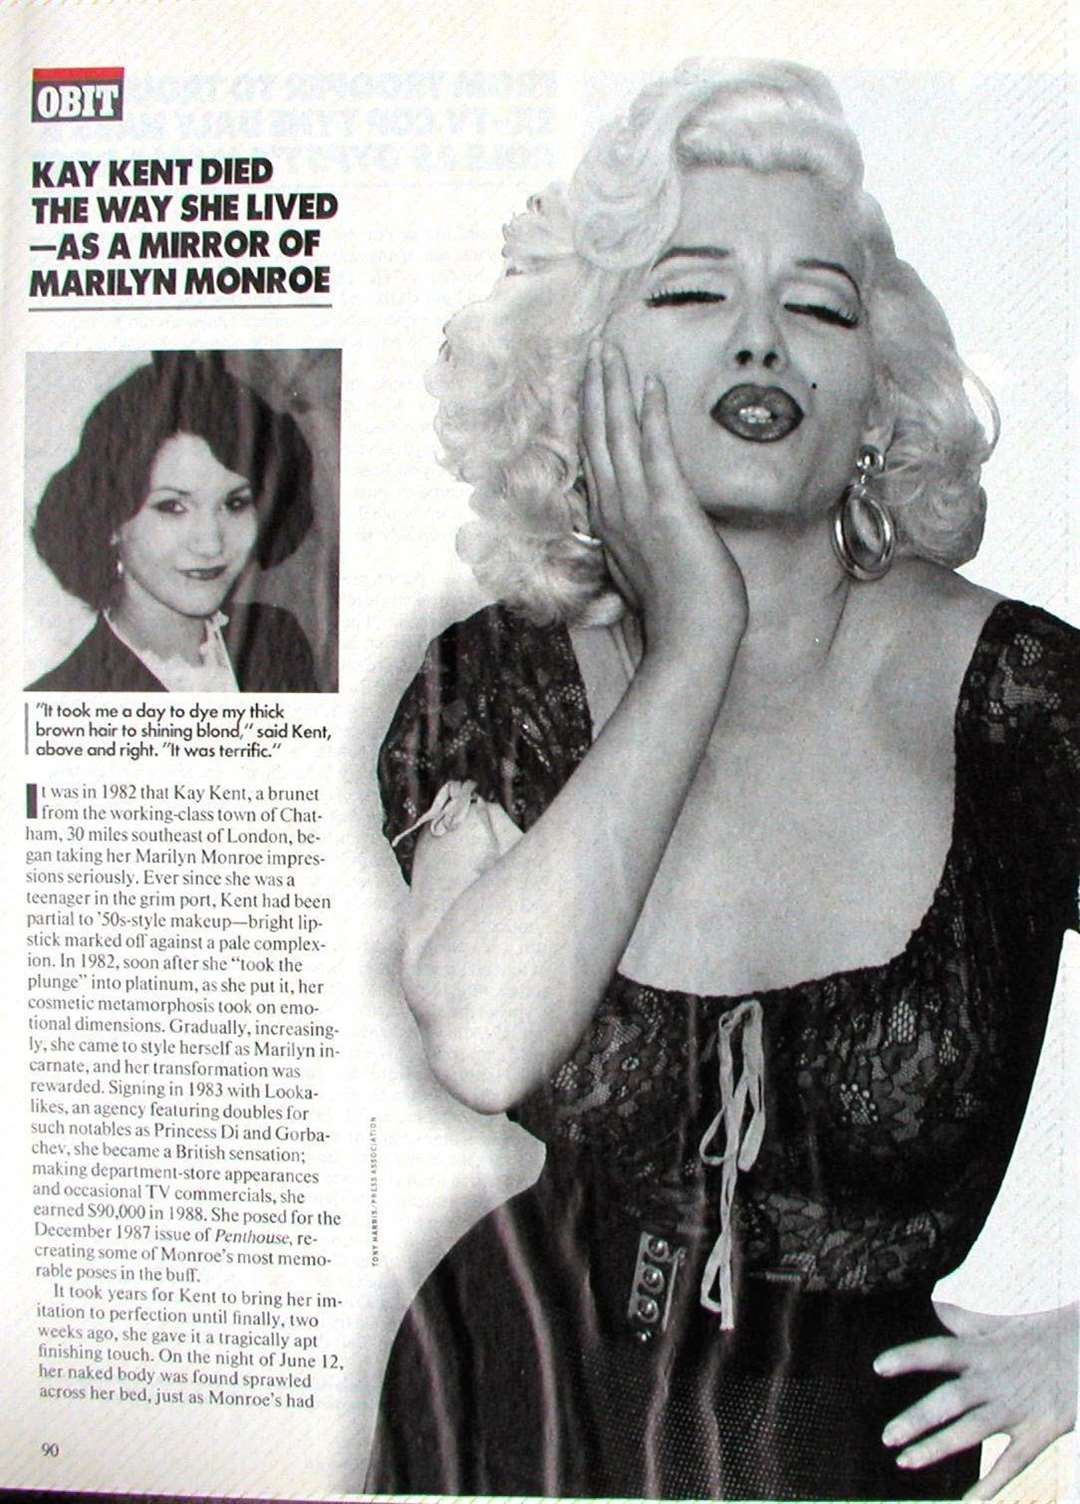 Marilyn Monroe lookalike Kay Kent